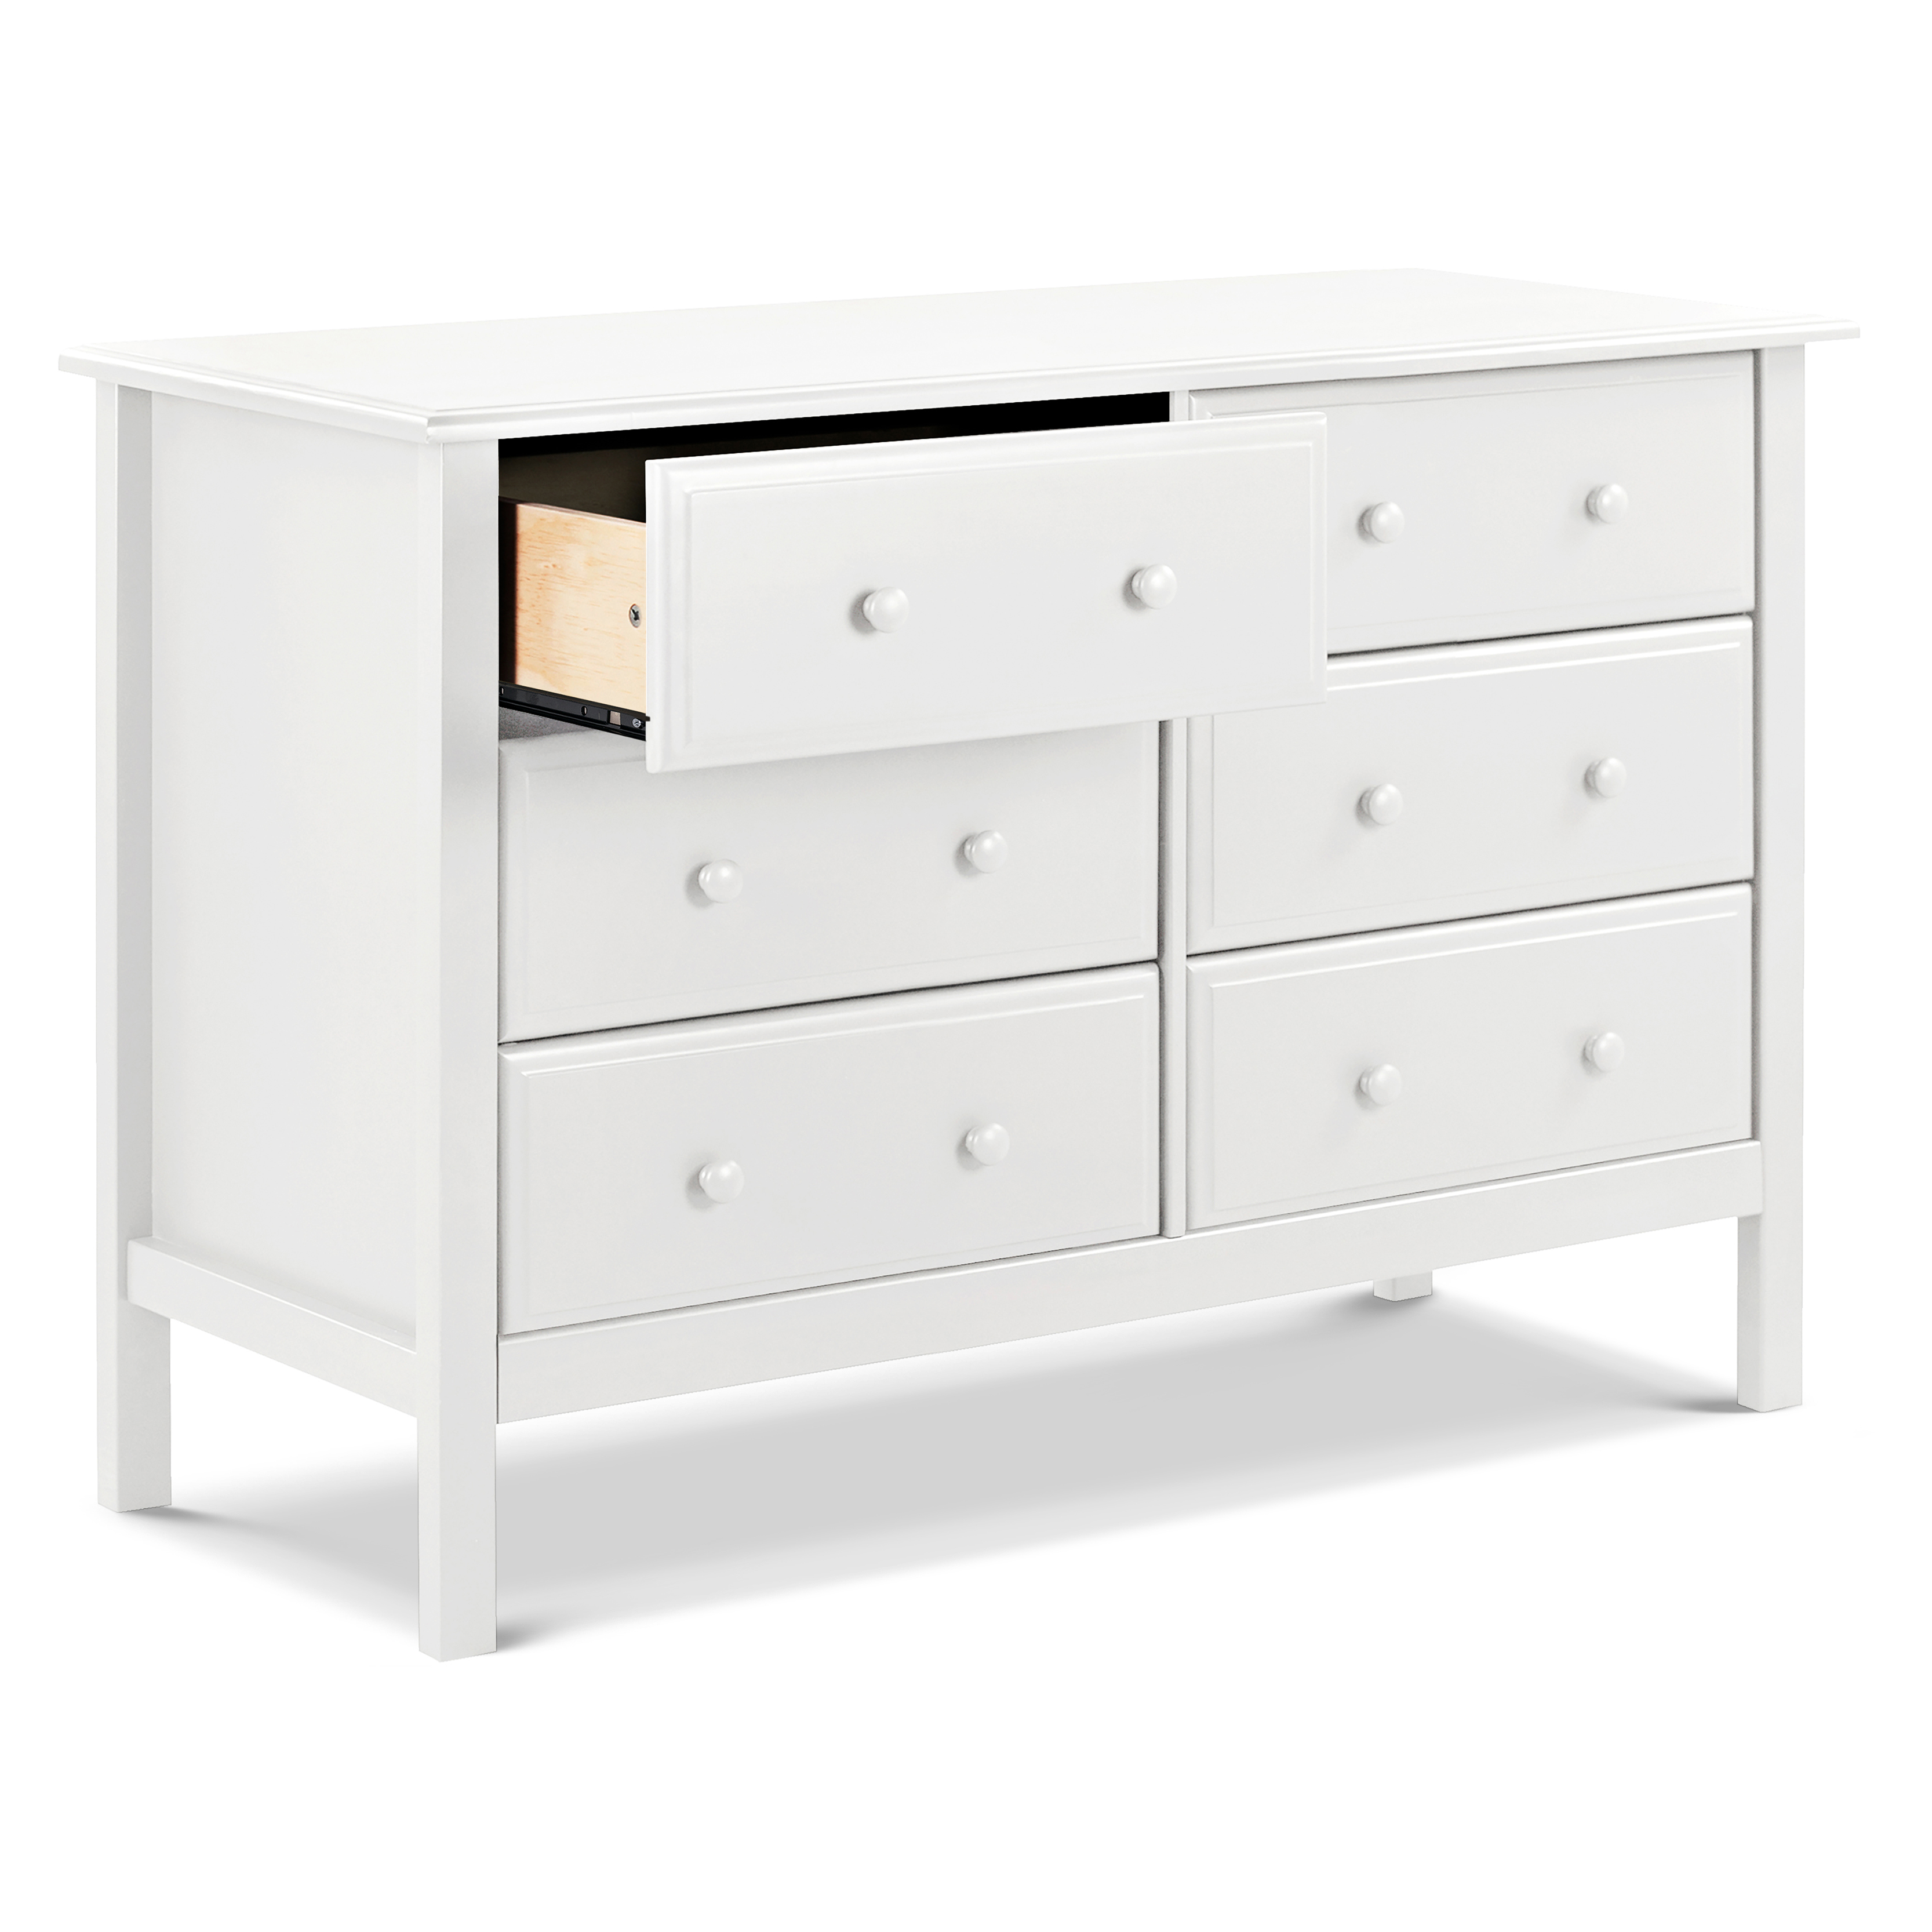 DaVinci Jayden 6-Drawer Double Dresser in White - image 5 of 5